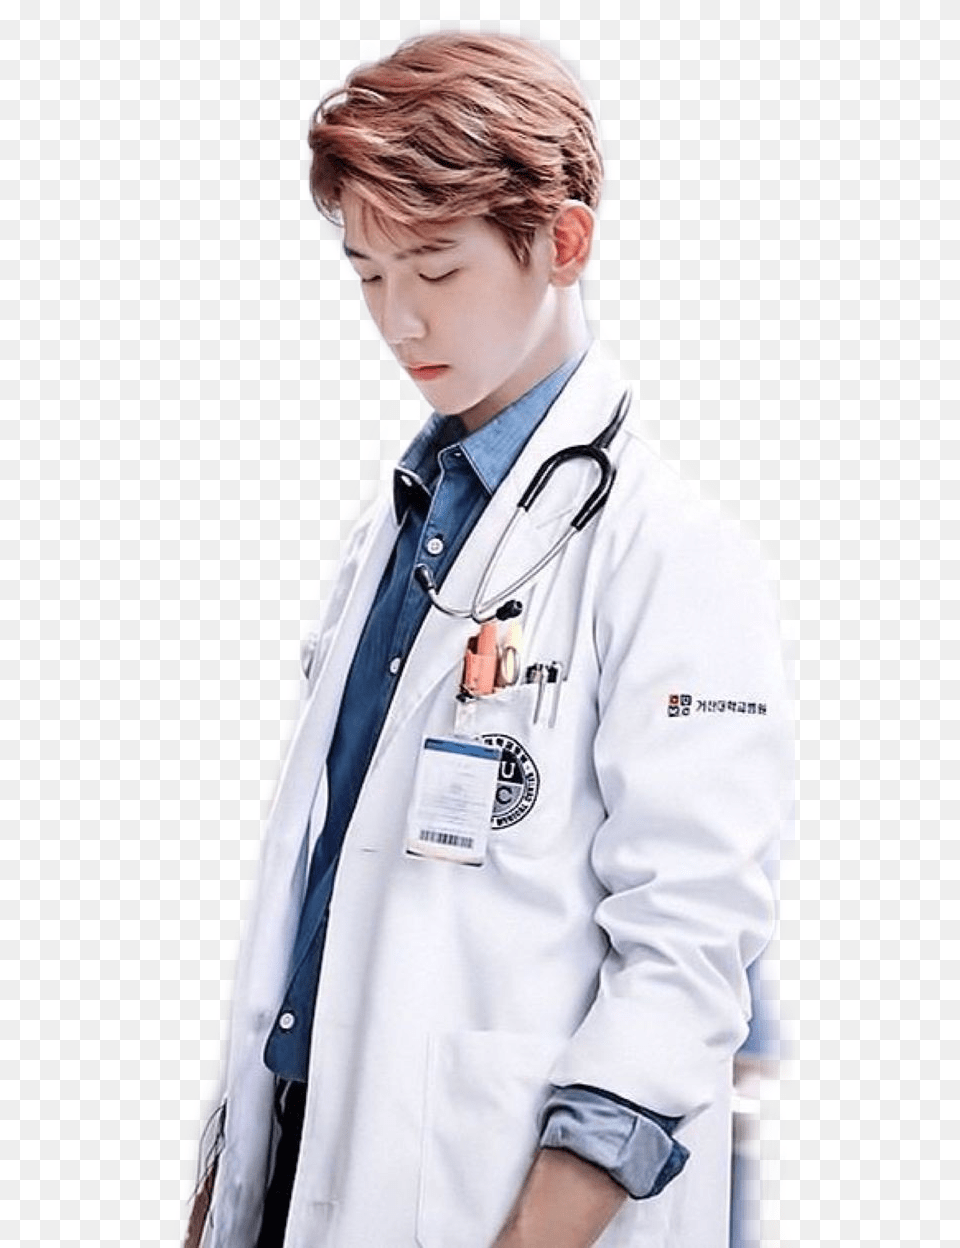 Baekhyun Doctor Doctor Baekhyun, Lab Coat, Clothing, Coat, Person Png Image